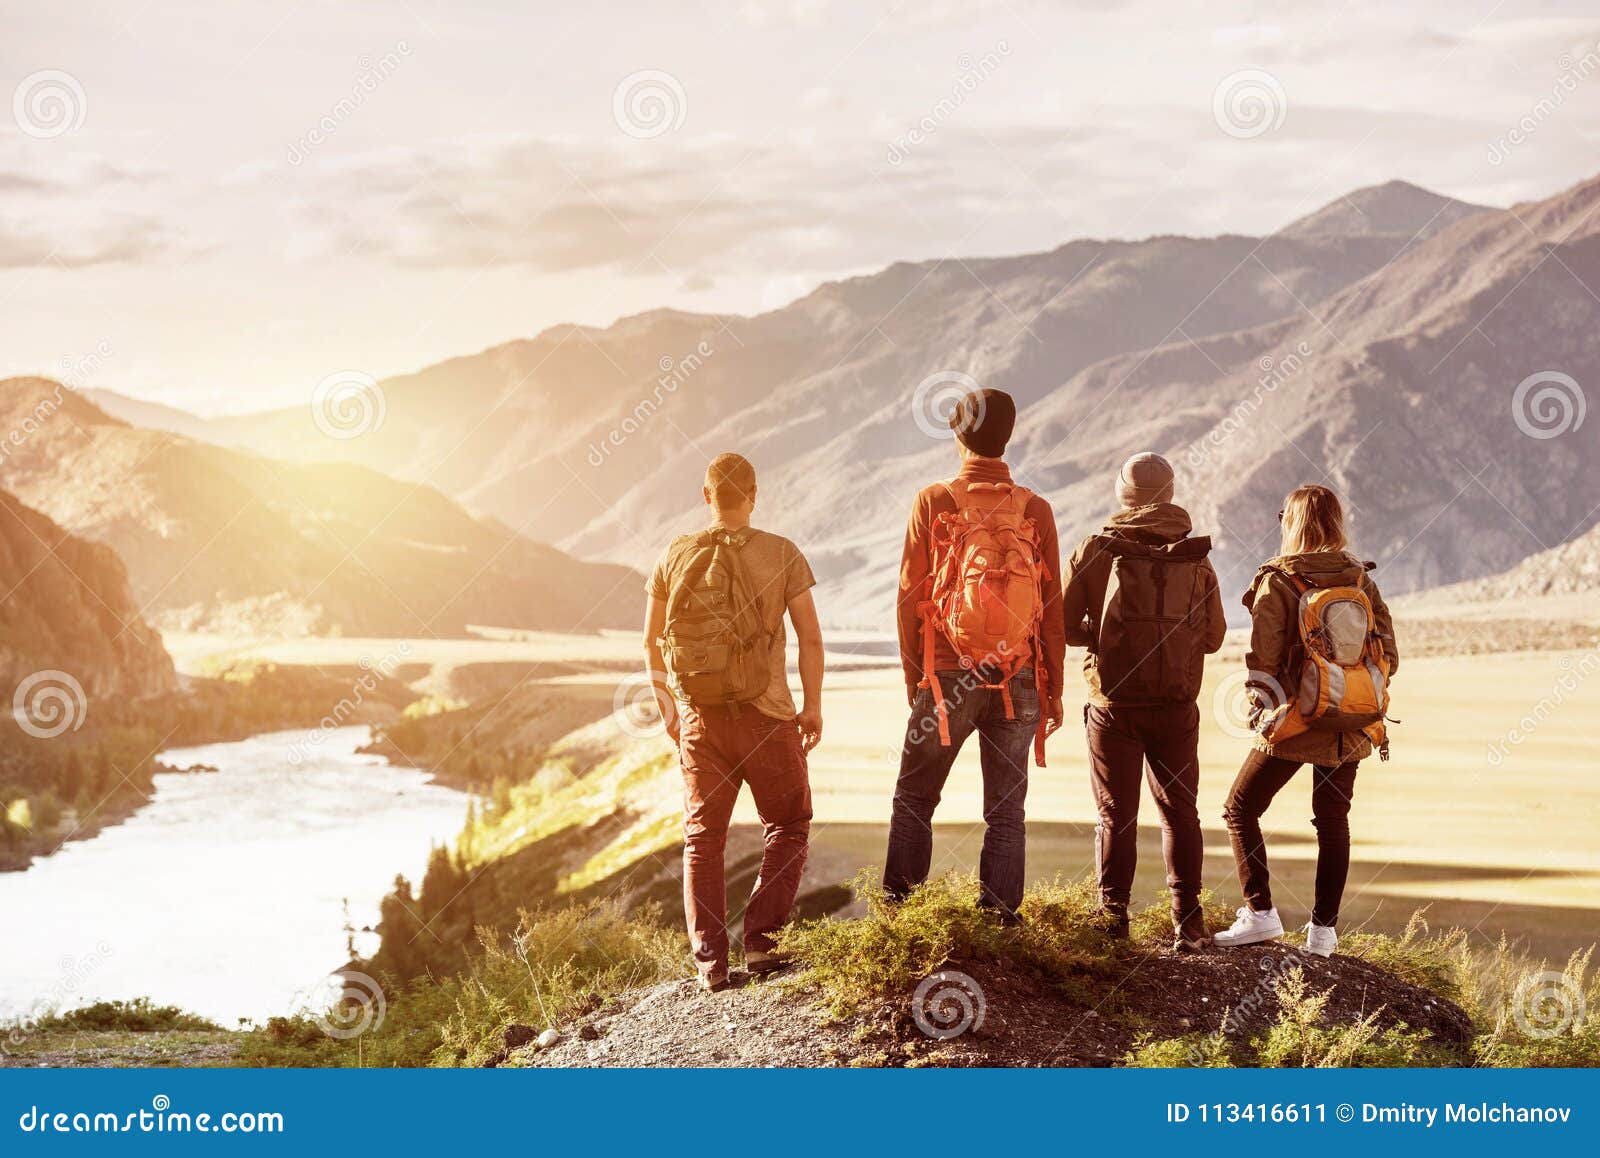 four friends sunset mountains travel concept